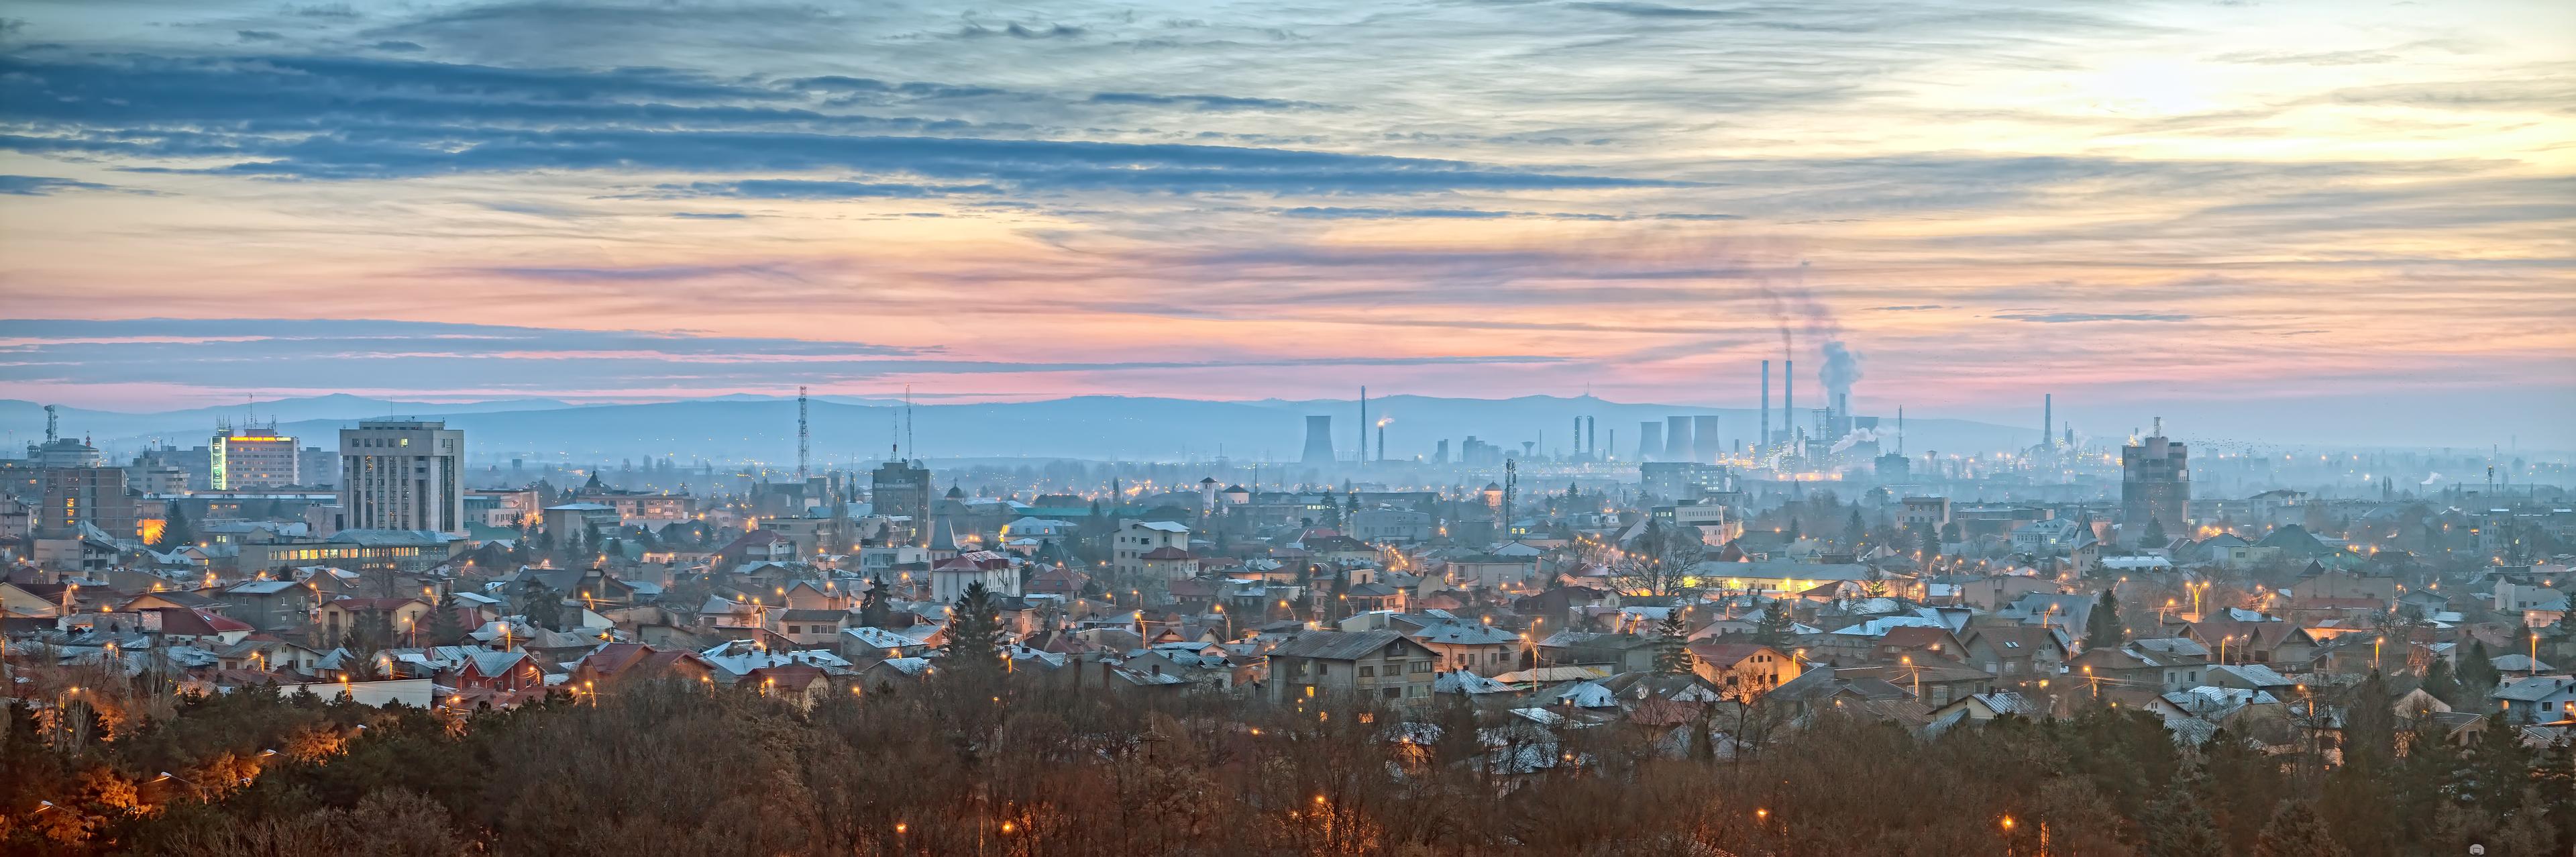 The Ploieşti city, cover photo